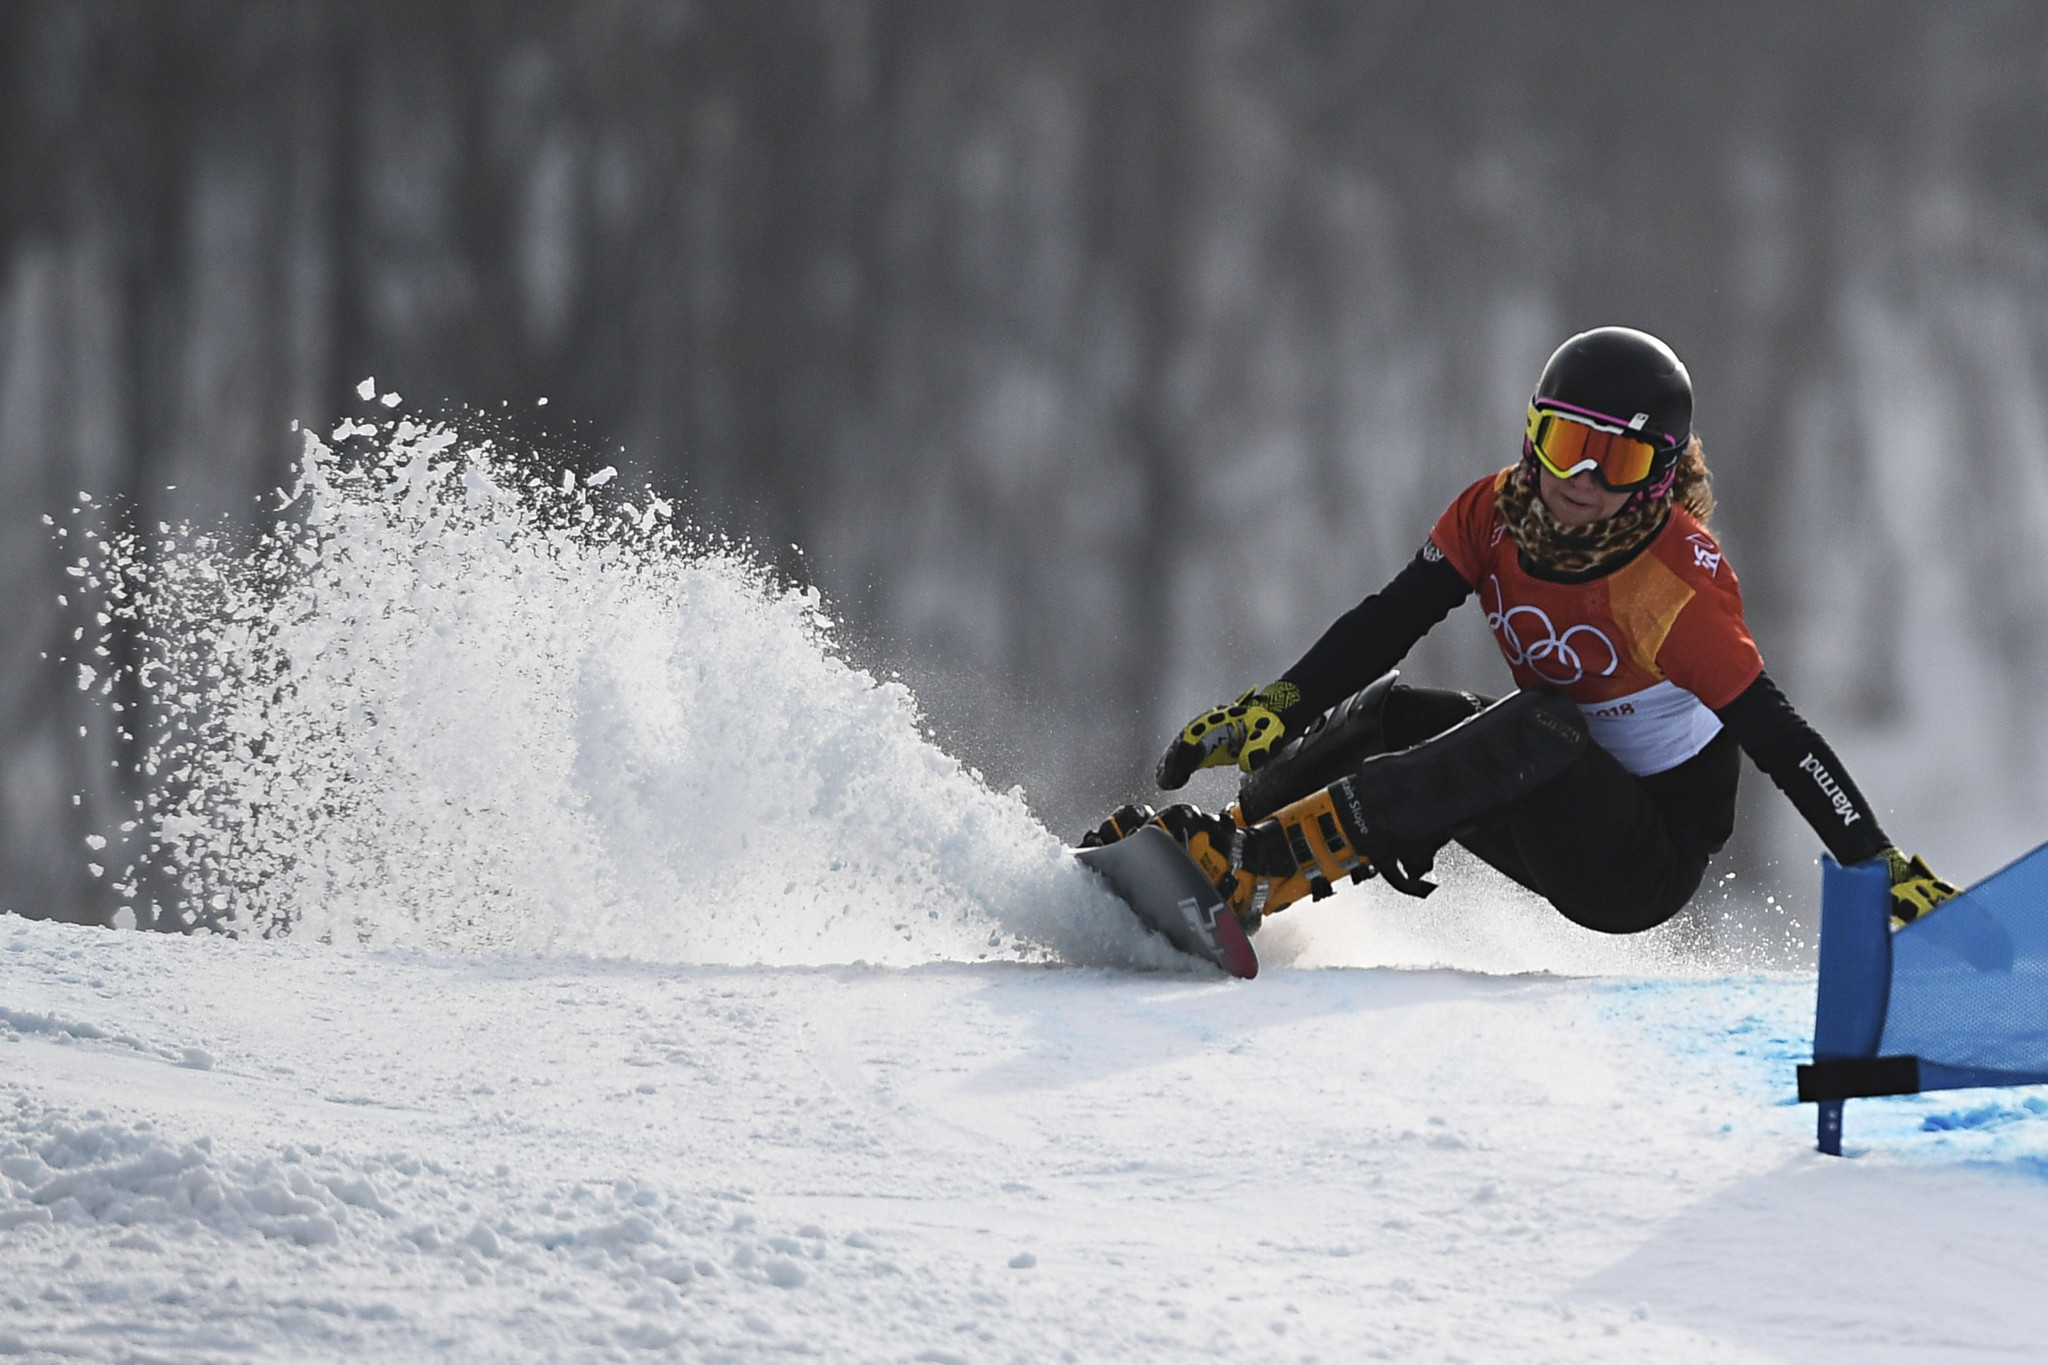 FIS Alpine Snowboard World Cup set to return to Pyeongchang 2018 Winter Olympics venue